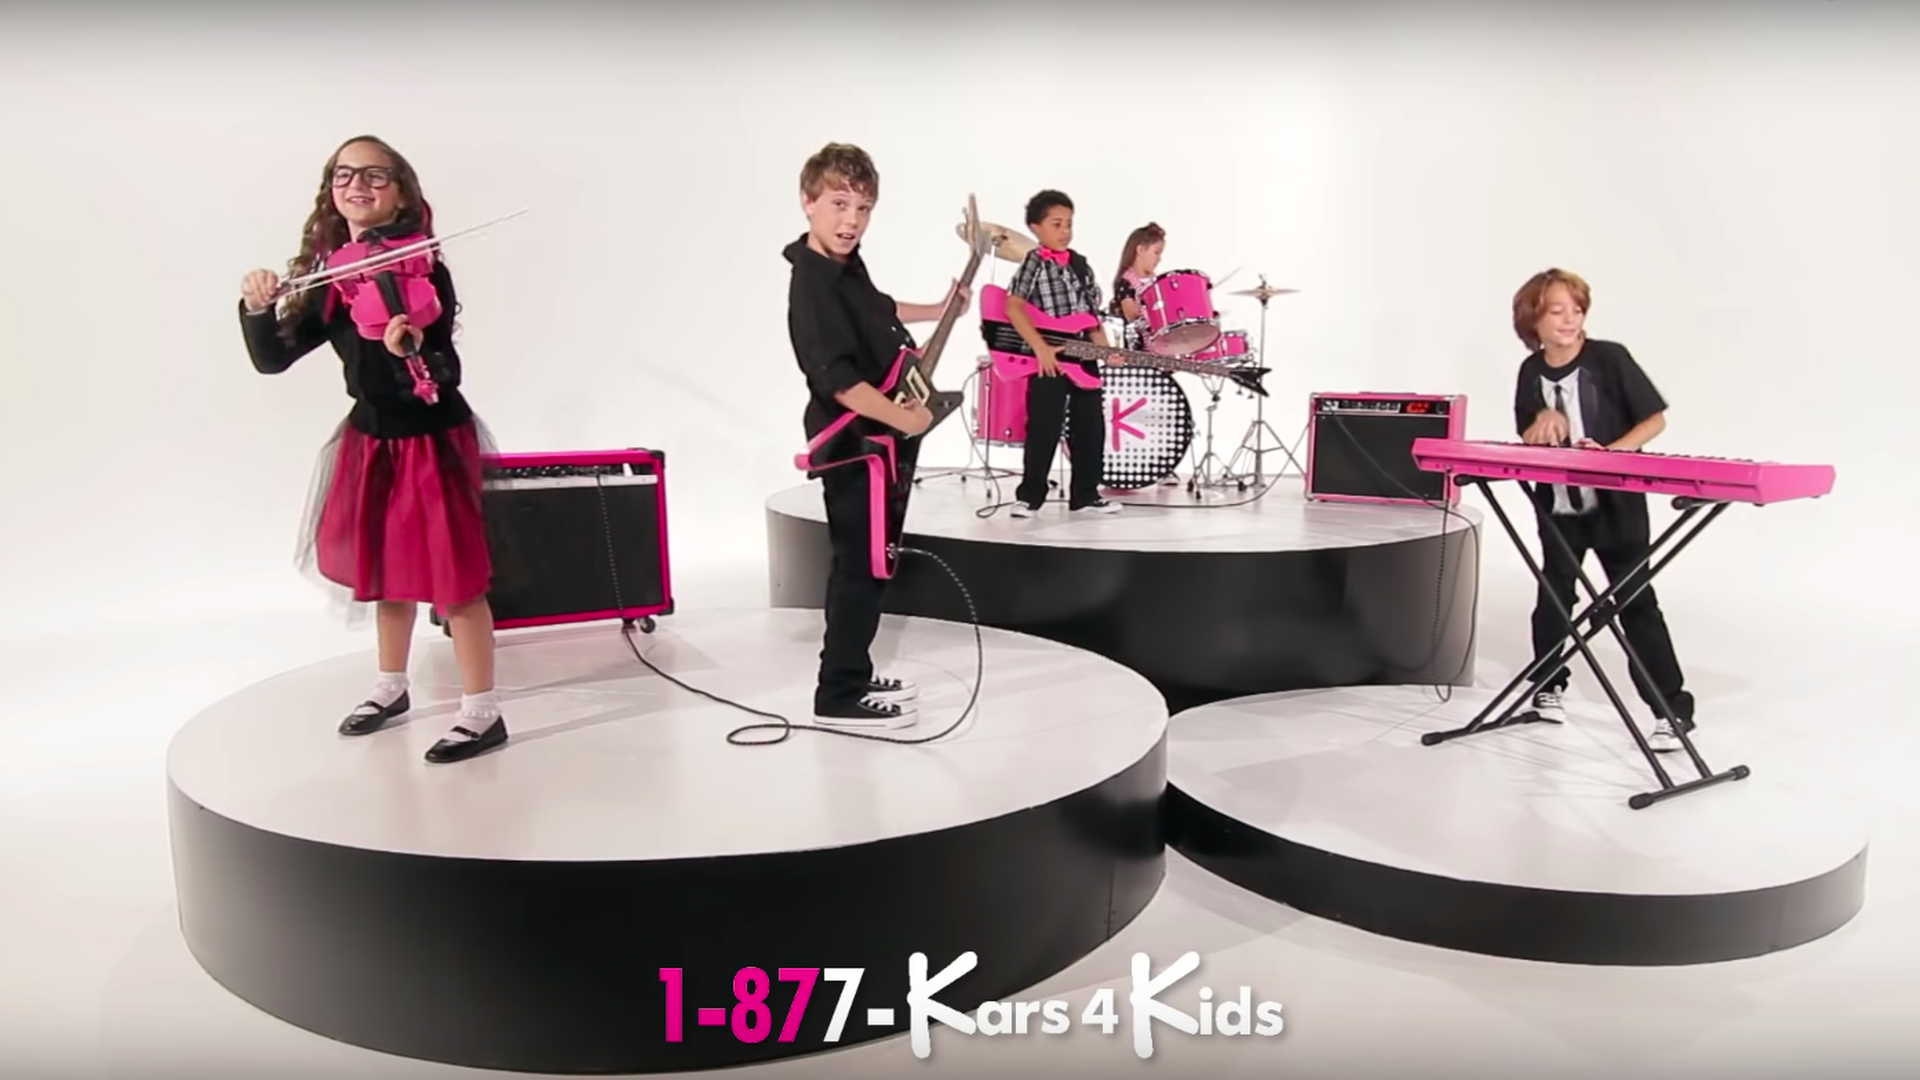 Screenshot of Kars 4 Kids commercial